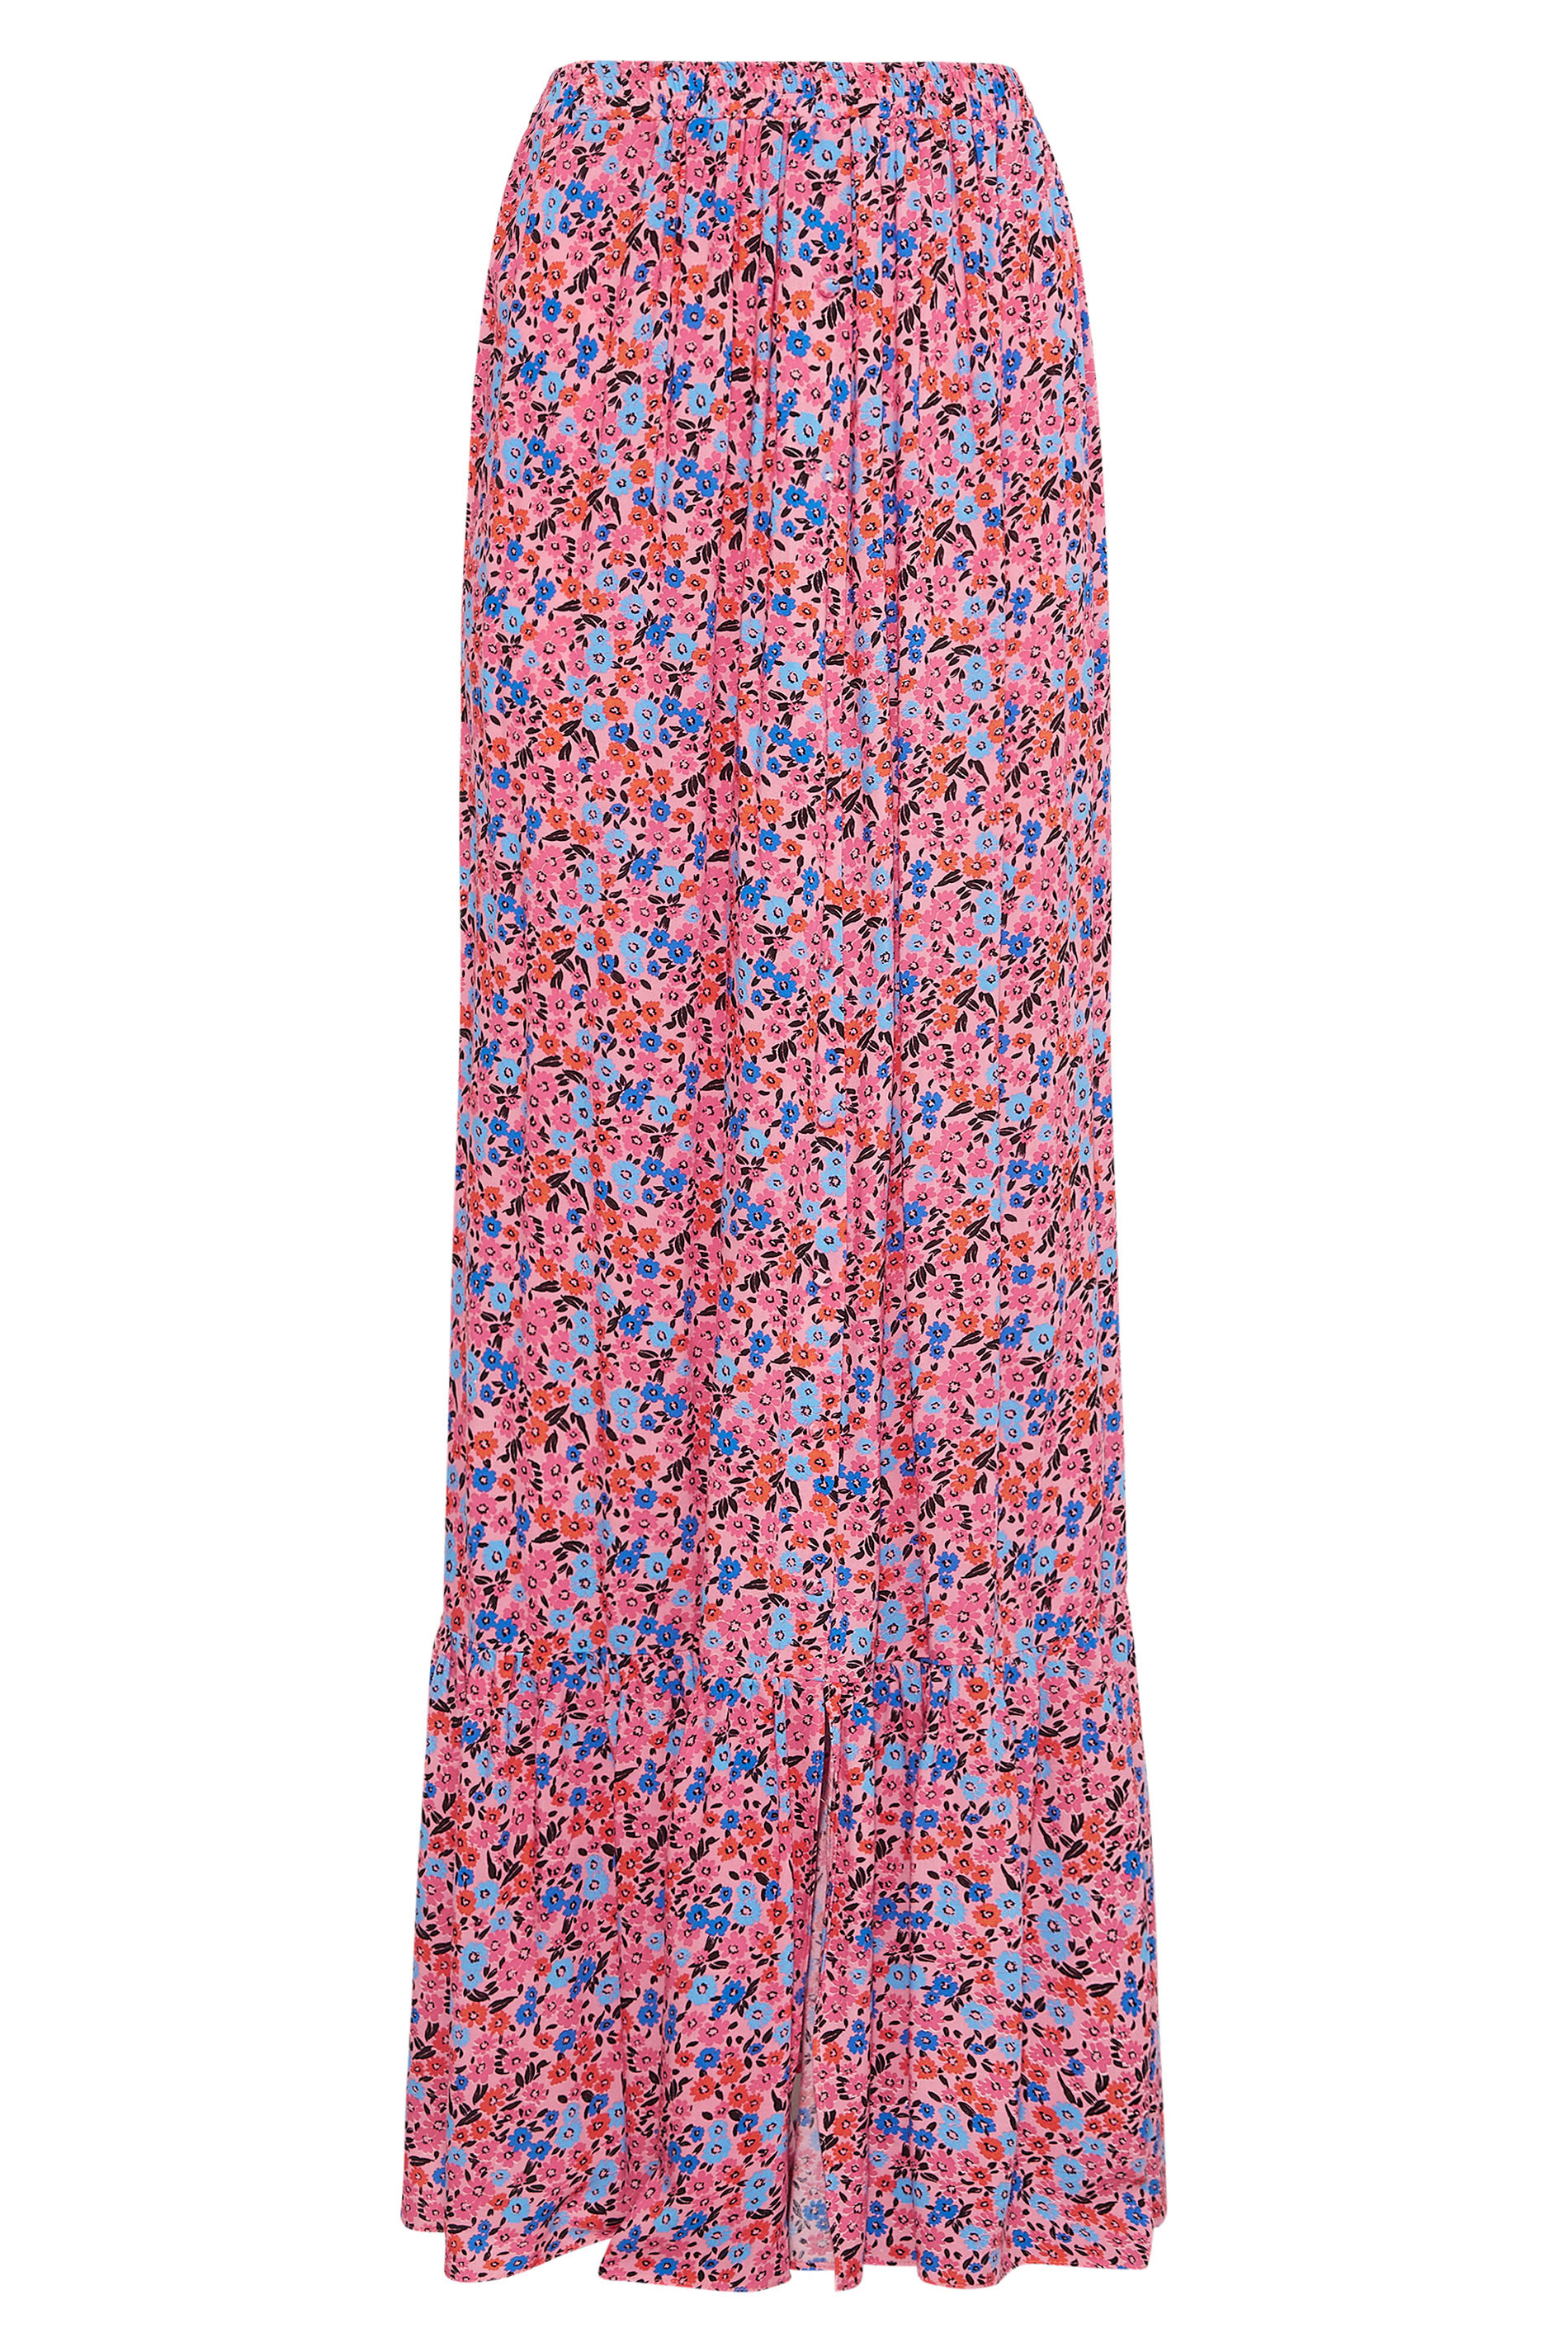 Tall Women's LTS Pink Ditsy Floral Maxi Skirt | Long Tall Sally 3